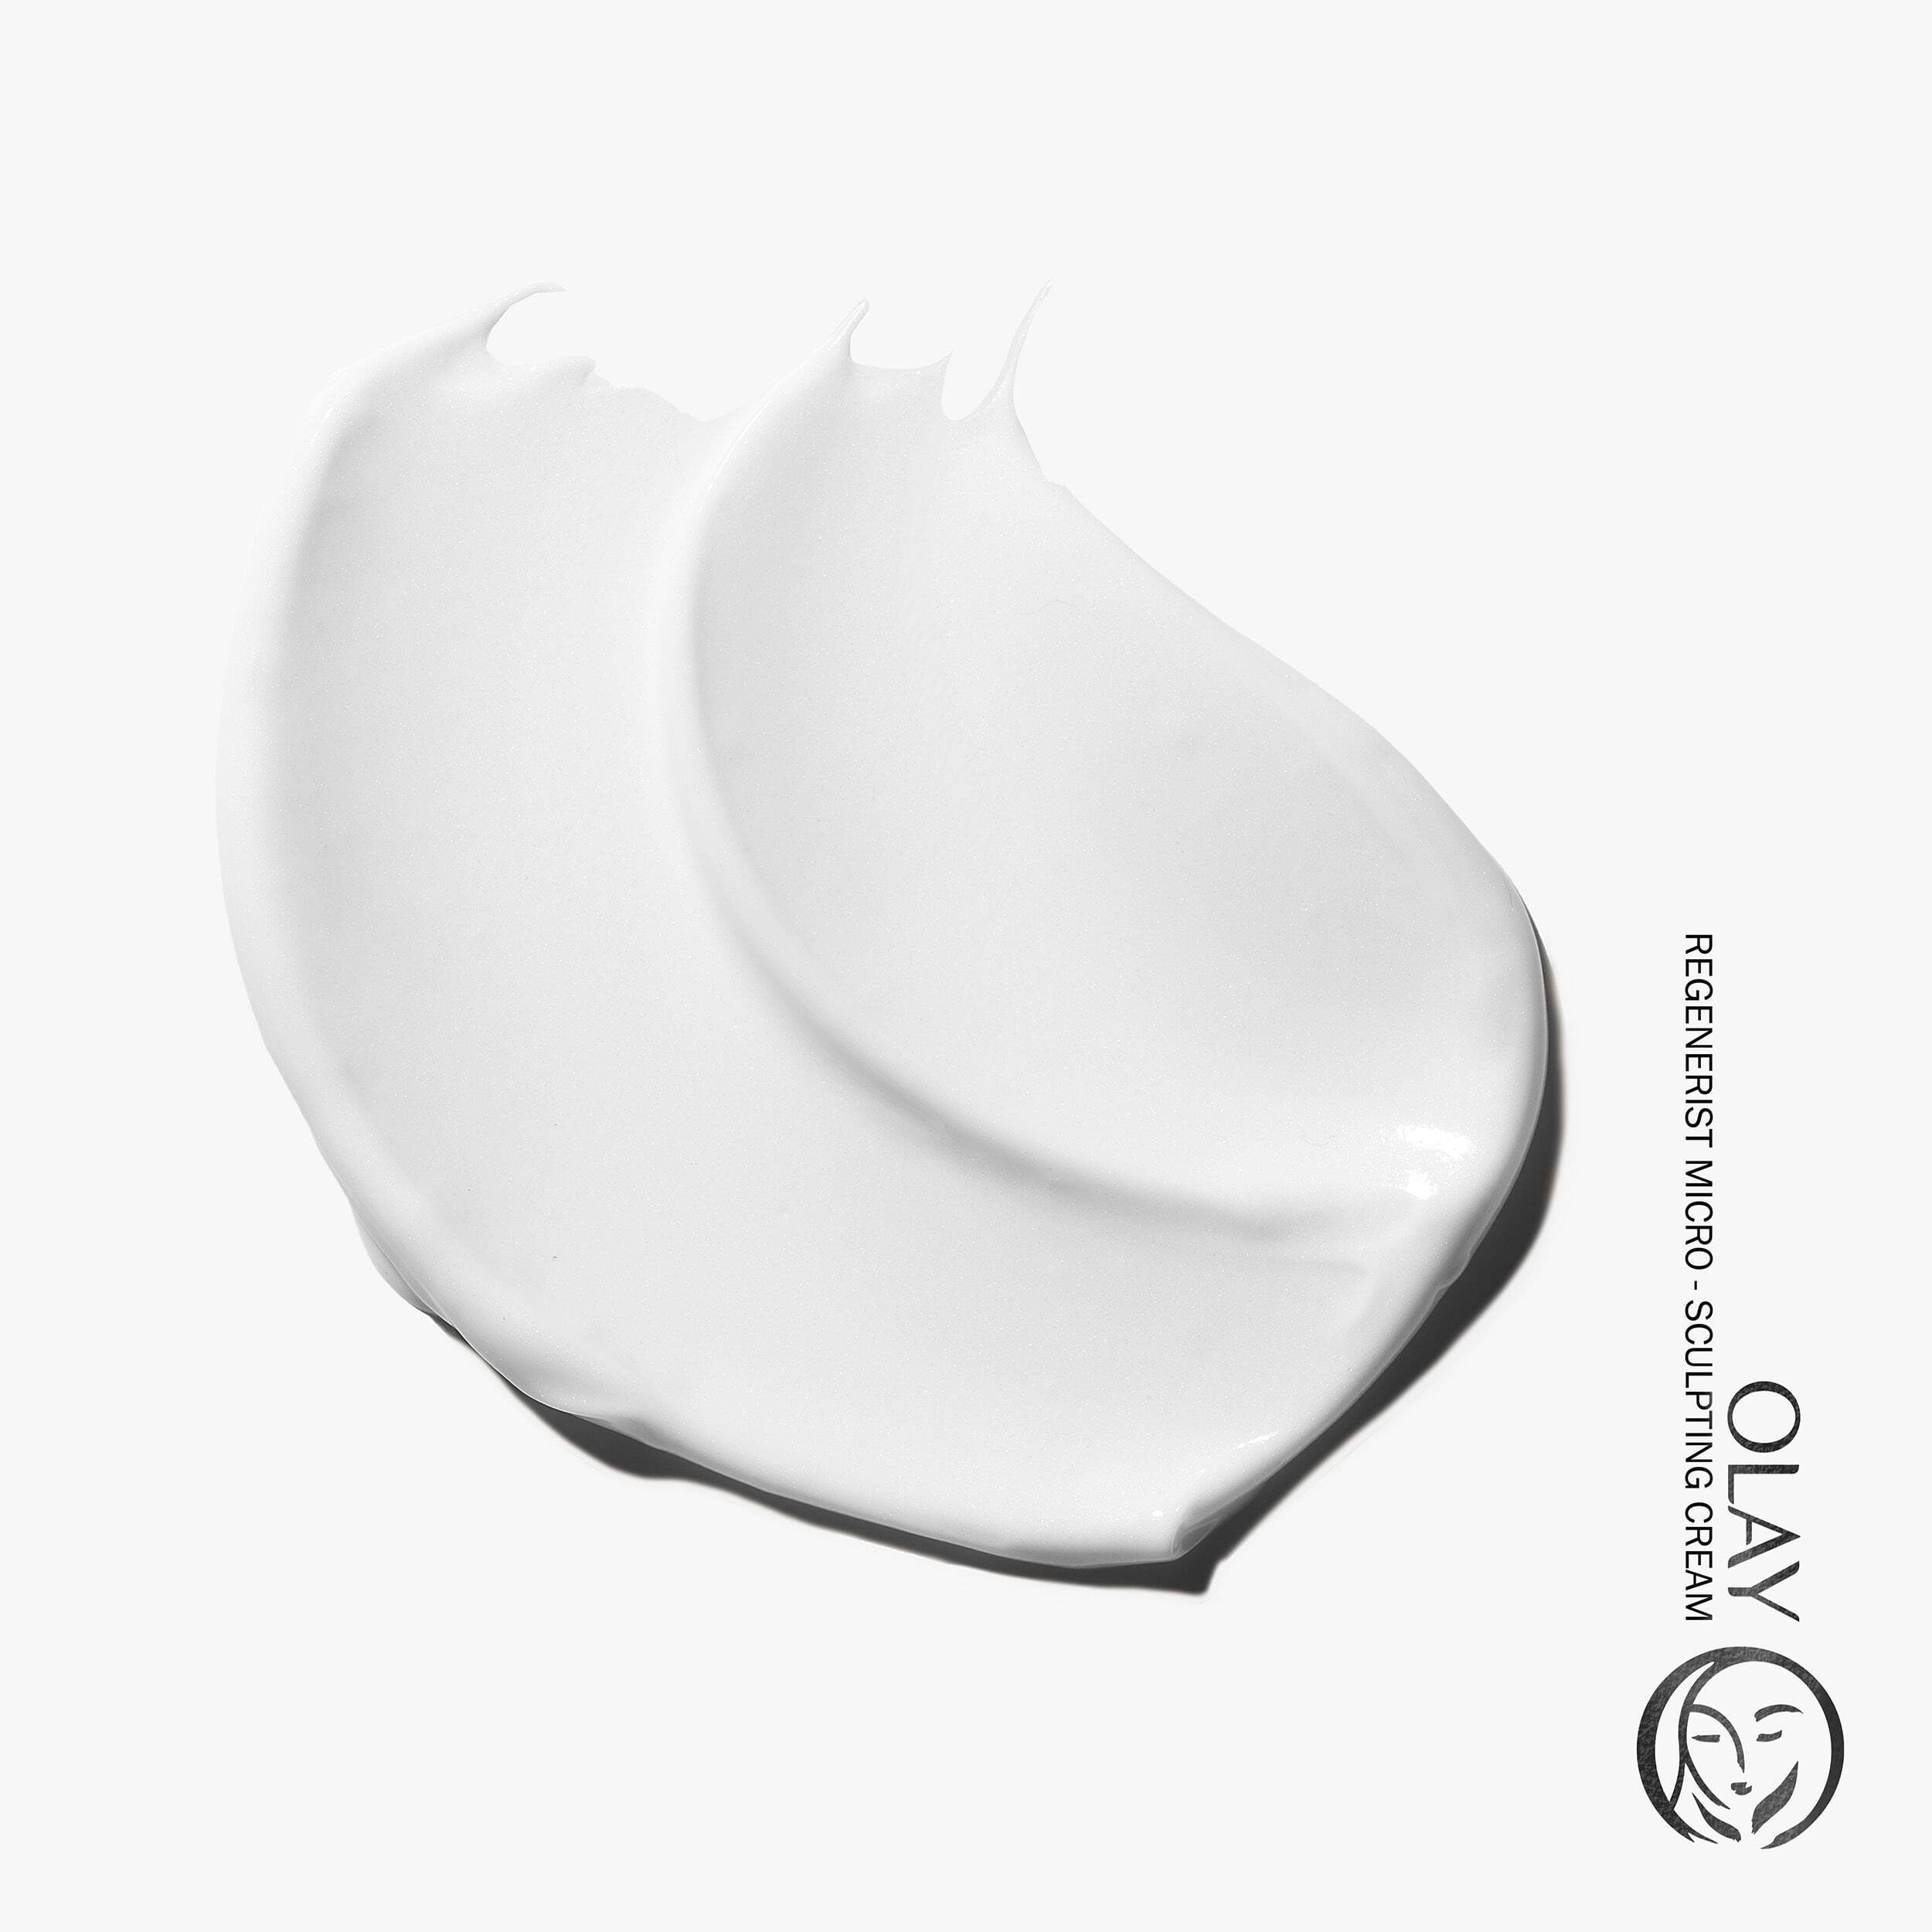 Olay Skincare Regenerist Micro-Sculpting Face Cream, Facial Moisturizer, 0.5 oz - image 4 of 9